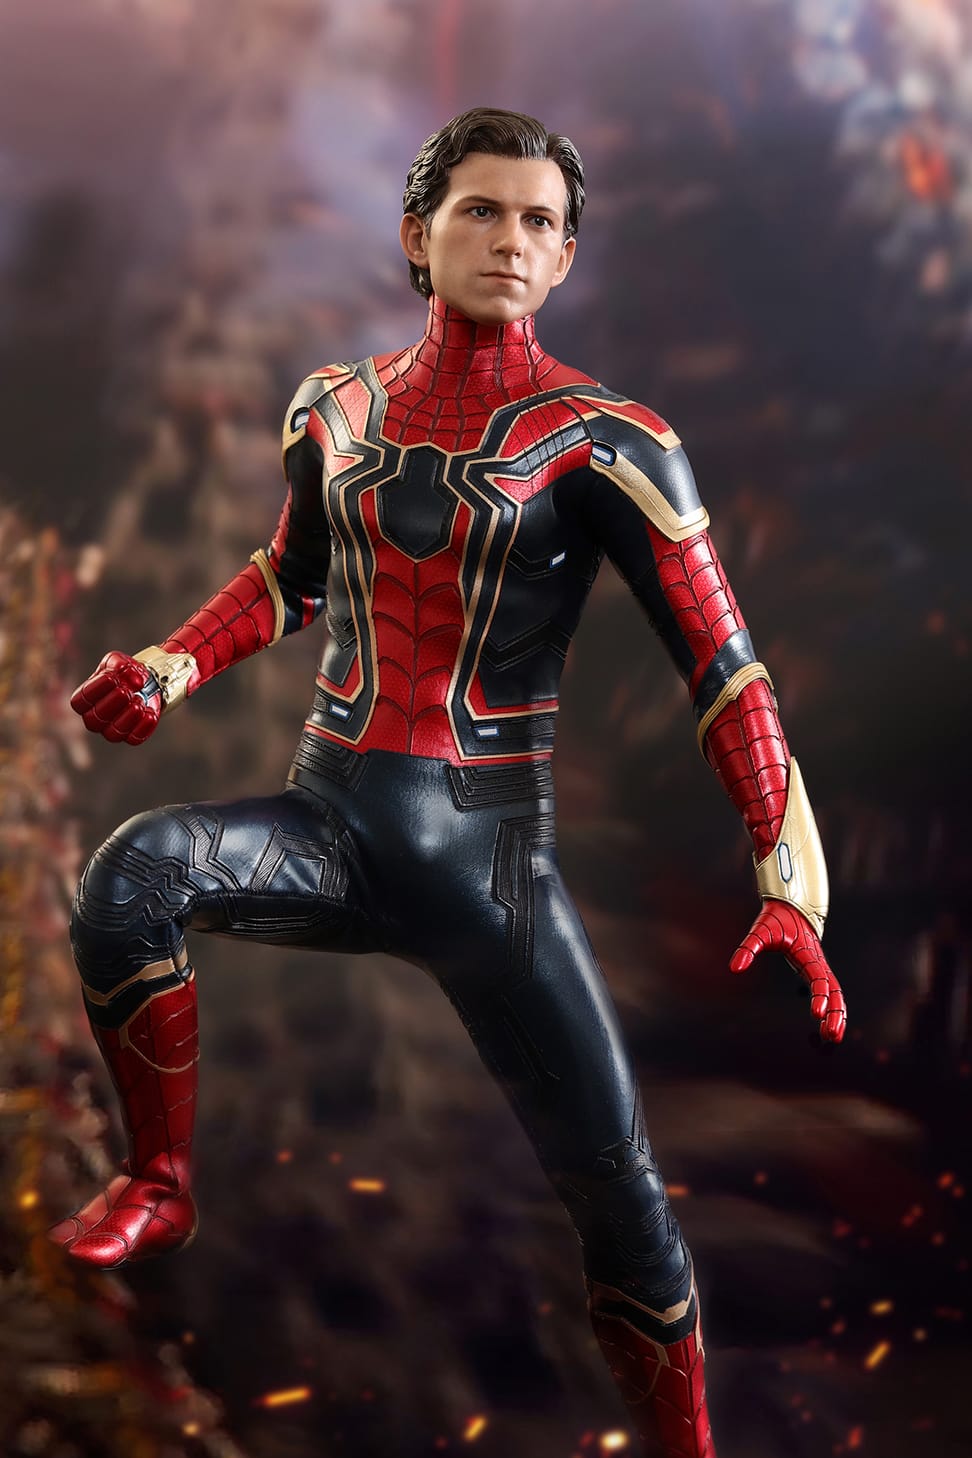 spiderman infinity war toy